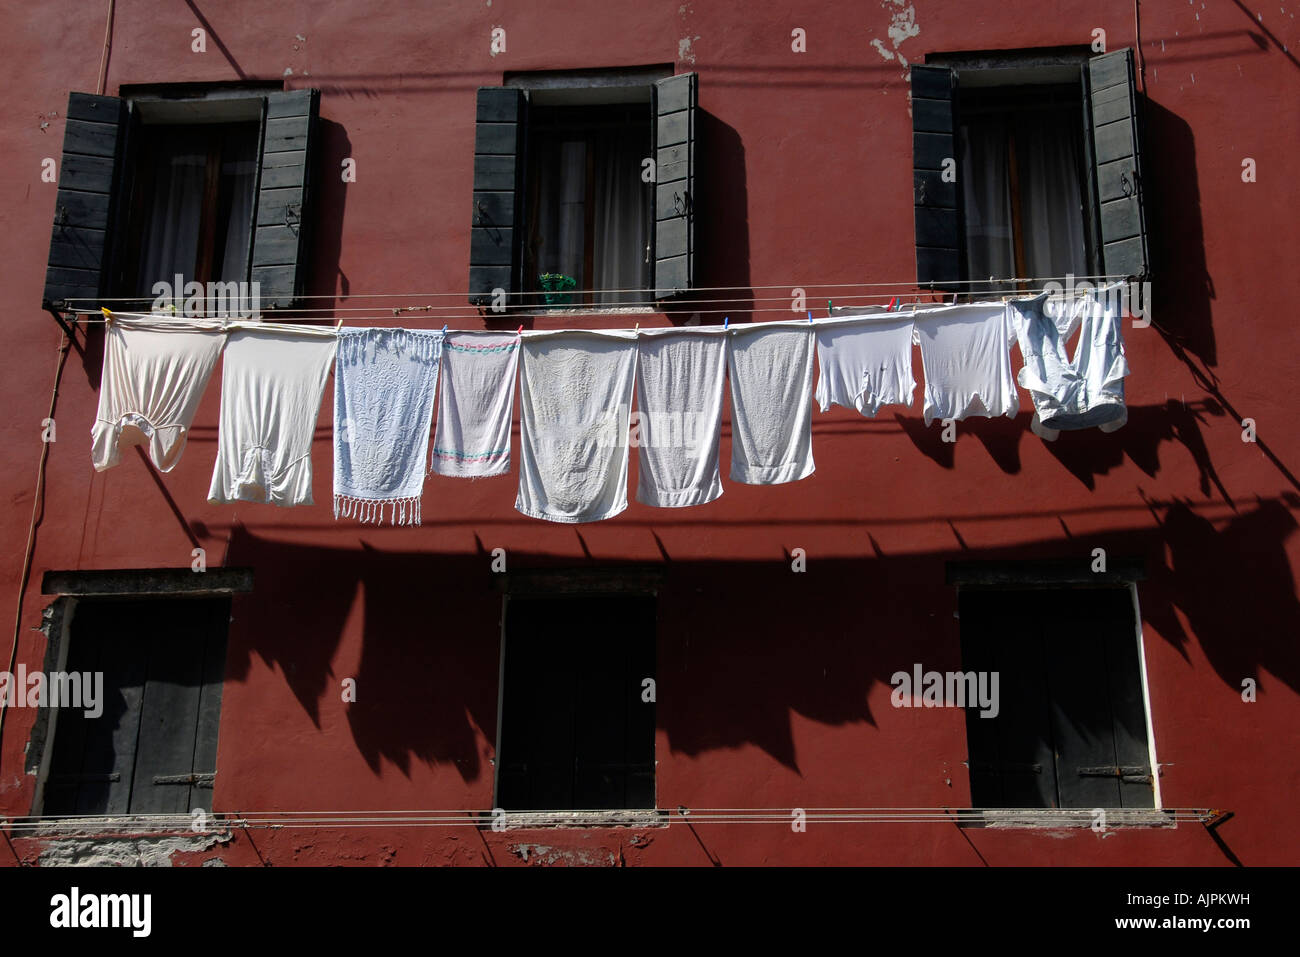 Clothes drying on washing line Cannaregio Venice Italy Stock Photo